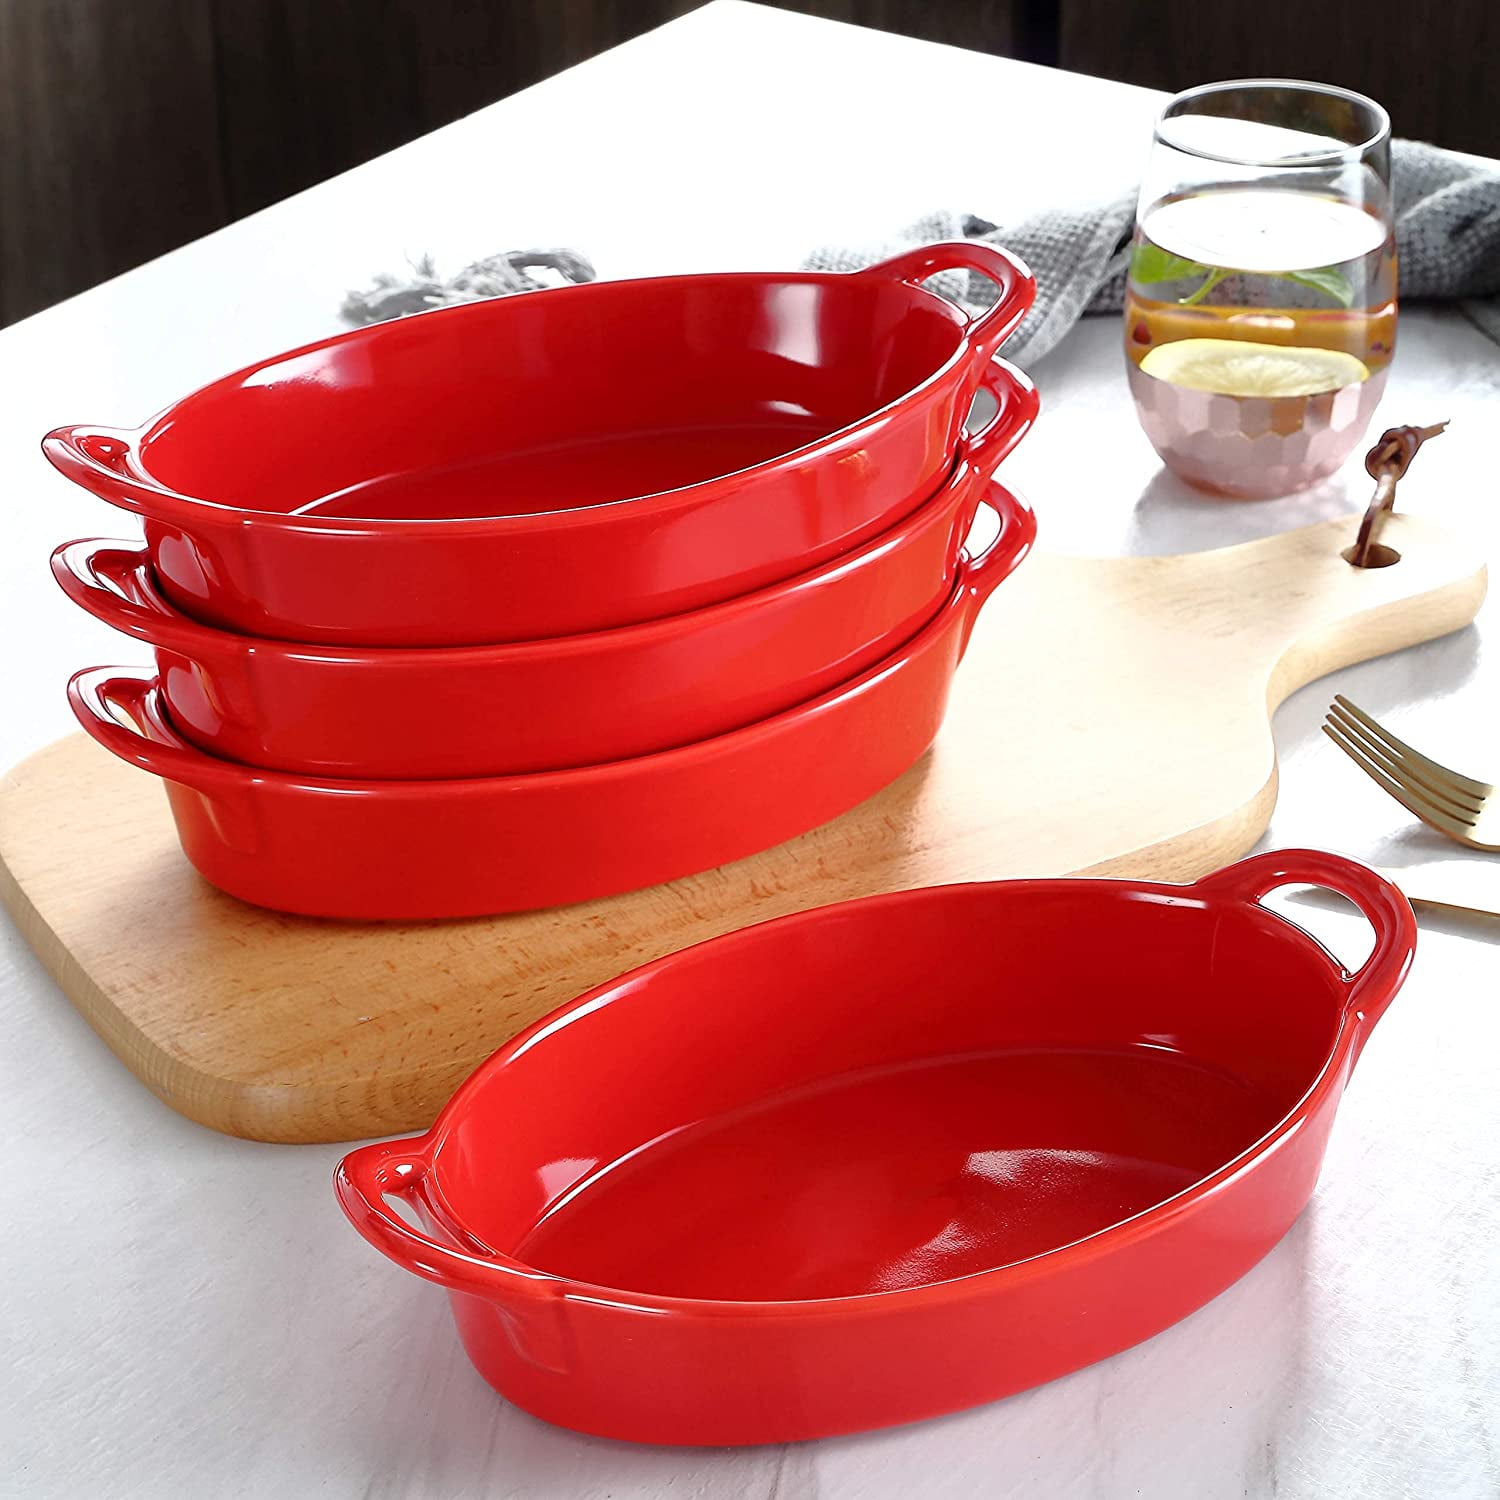 Red Porcelain Bakeware Ideal for Creme Brulee easy cary handles nice table Serving dish Bruntmor Set of 4 Oval Au Gratin 8x5 Baking Dishes Lasagna Pan 